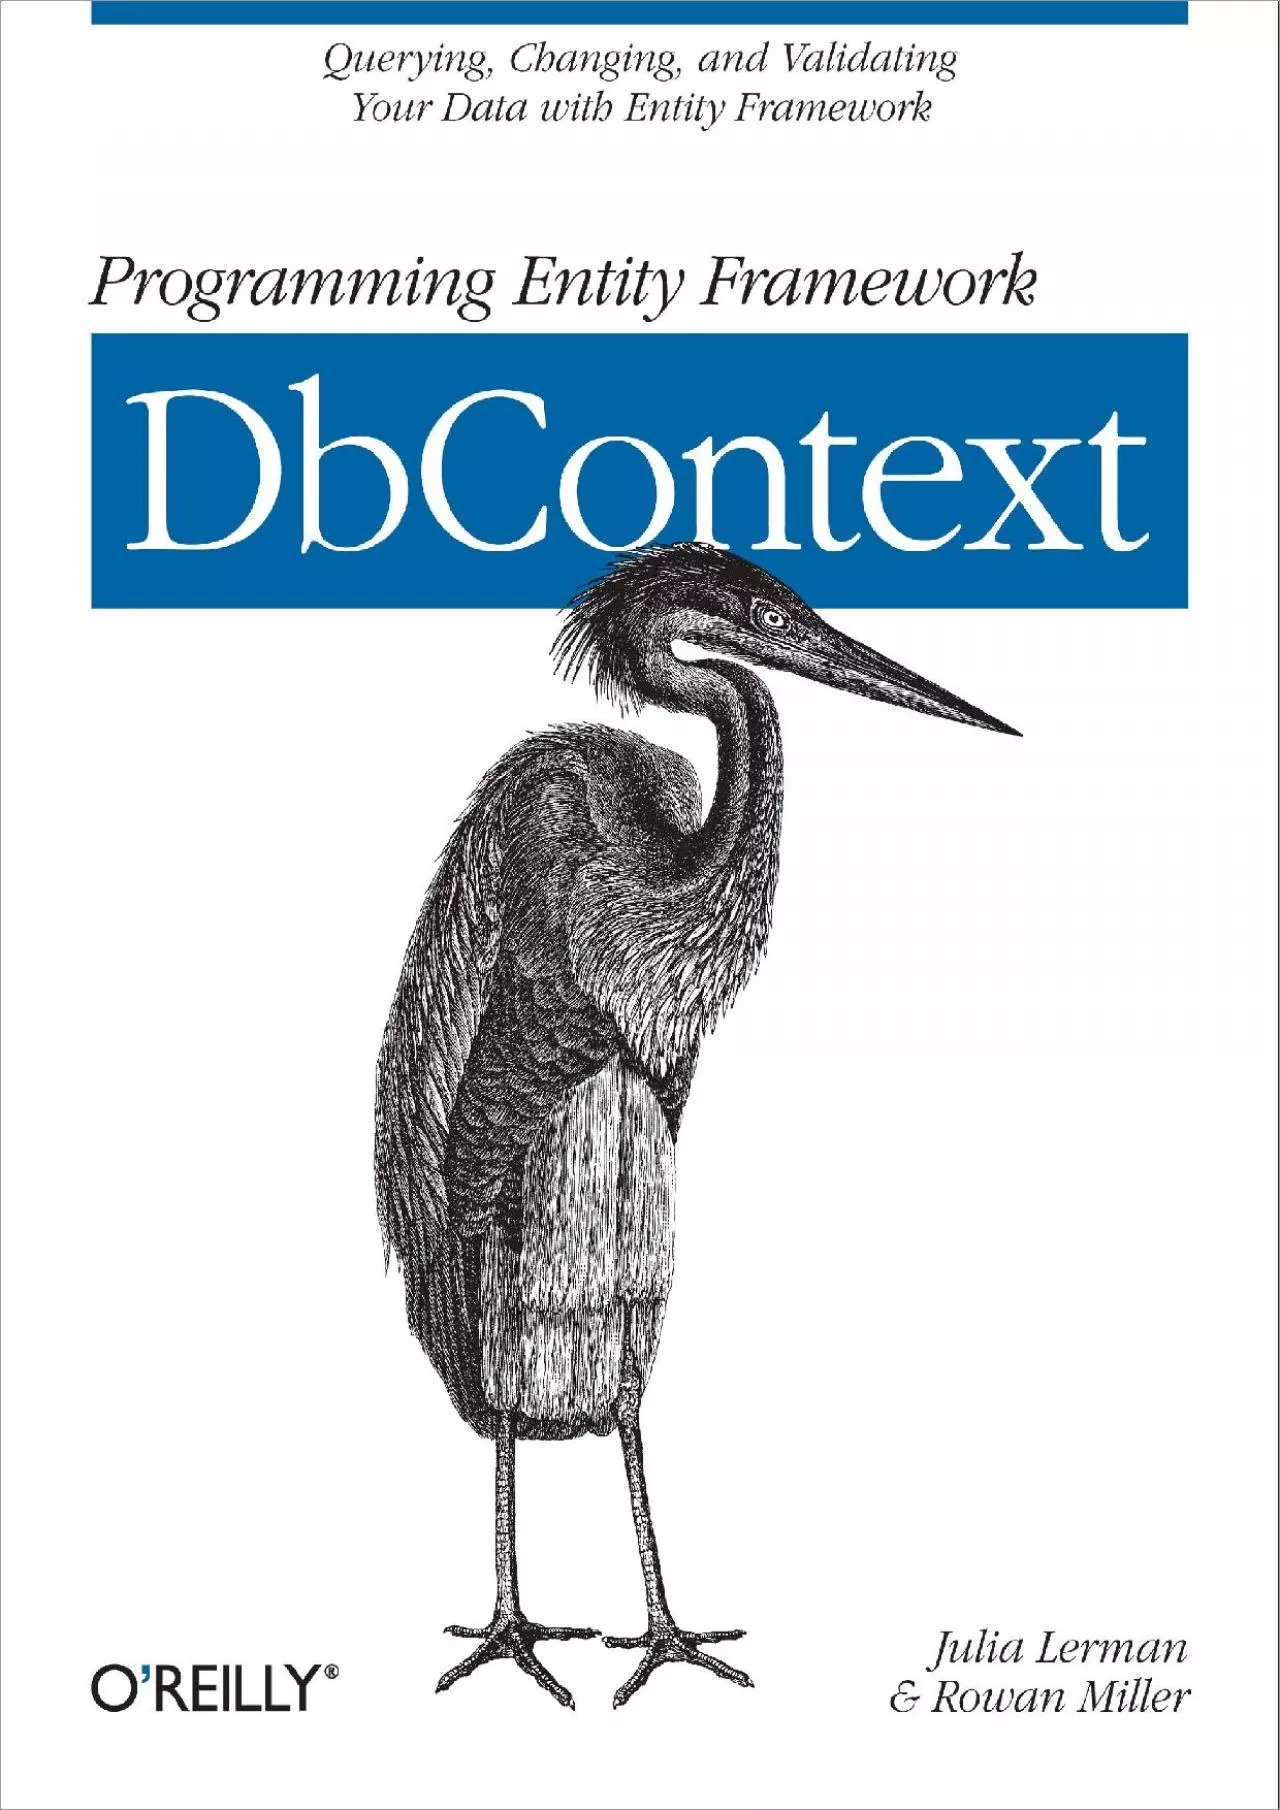 [DOWLOAD]-Programming Entity Framework: DbContext: Querying, Changing, and Validating